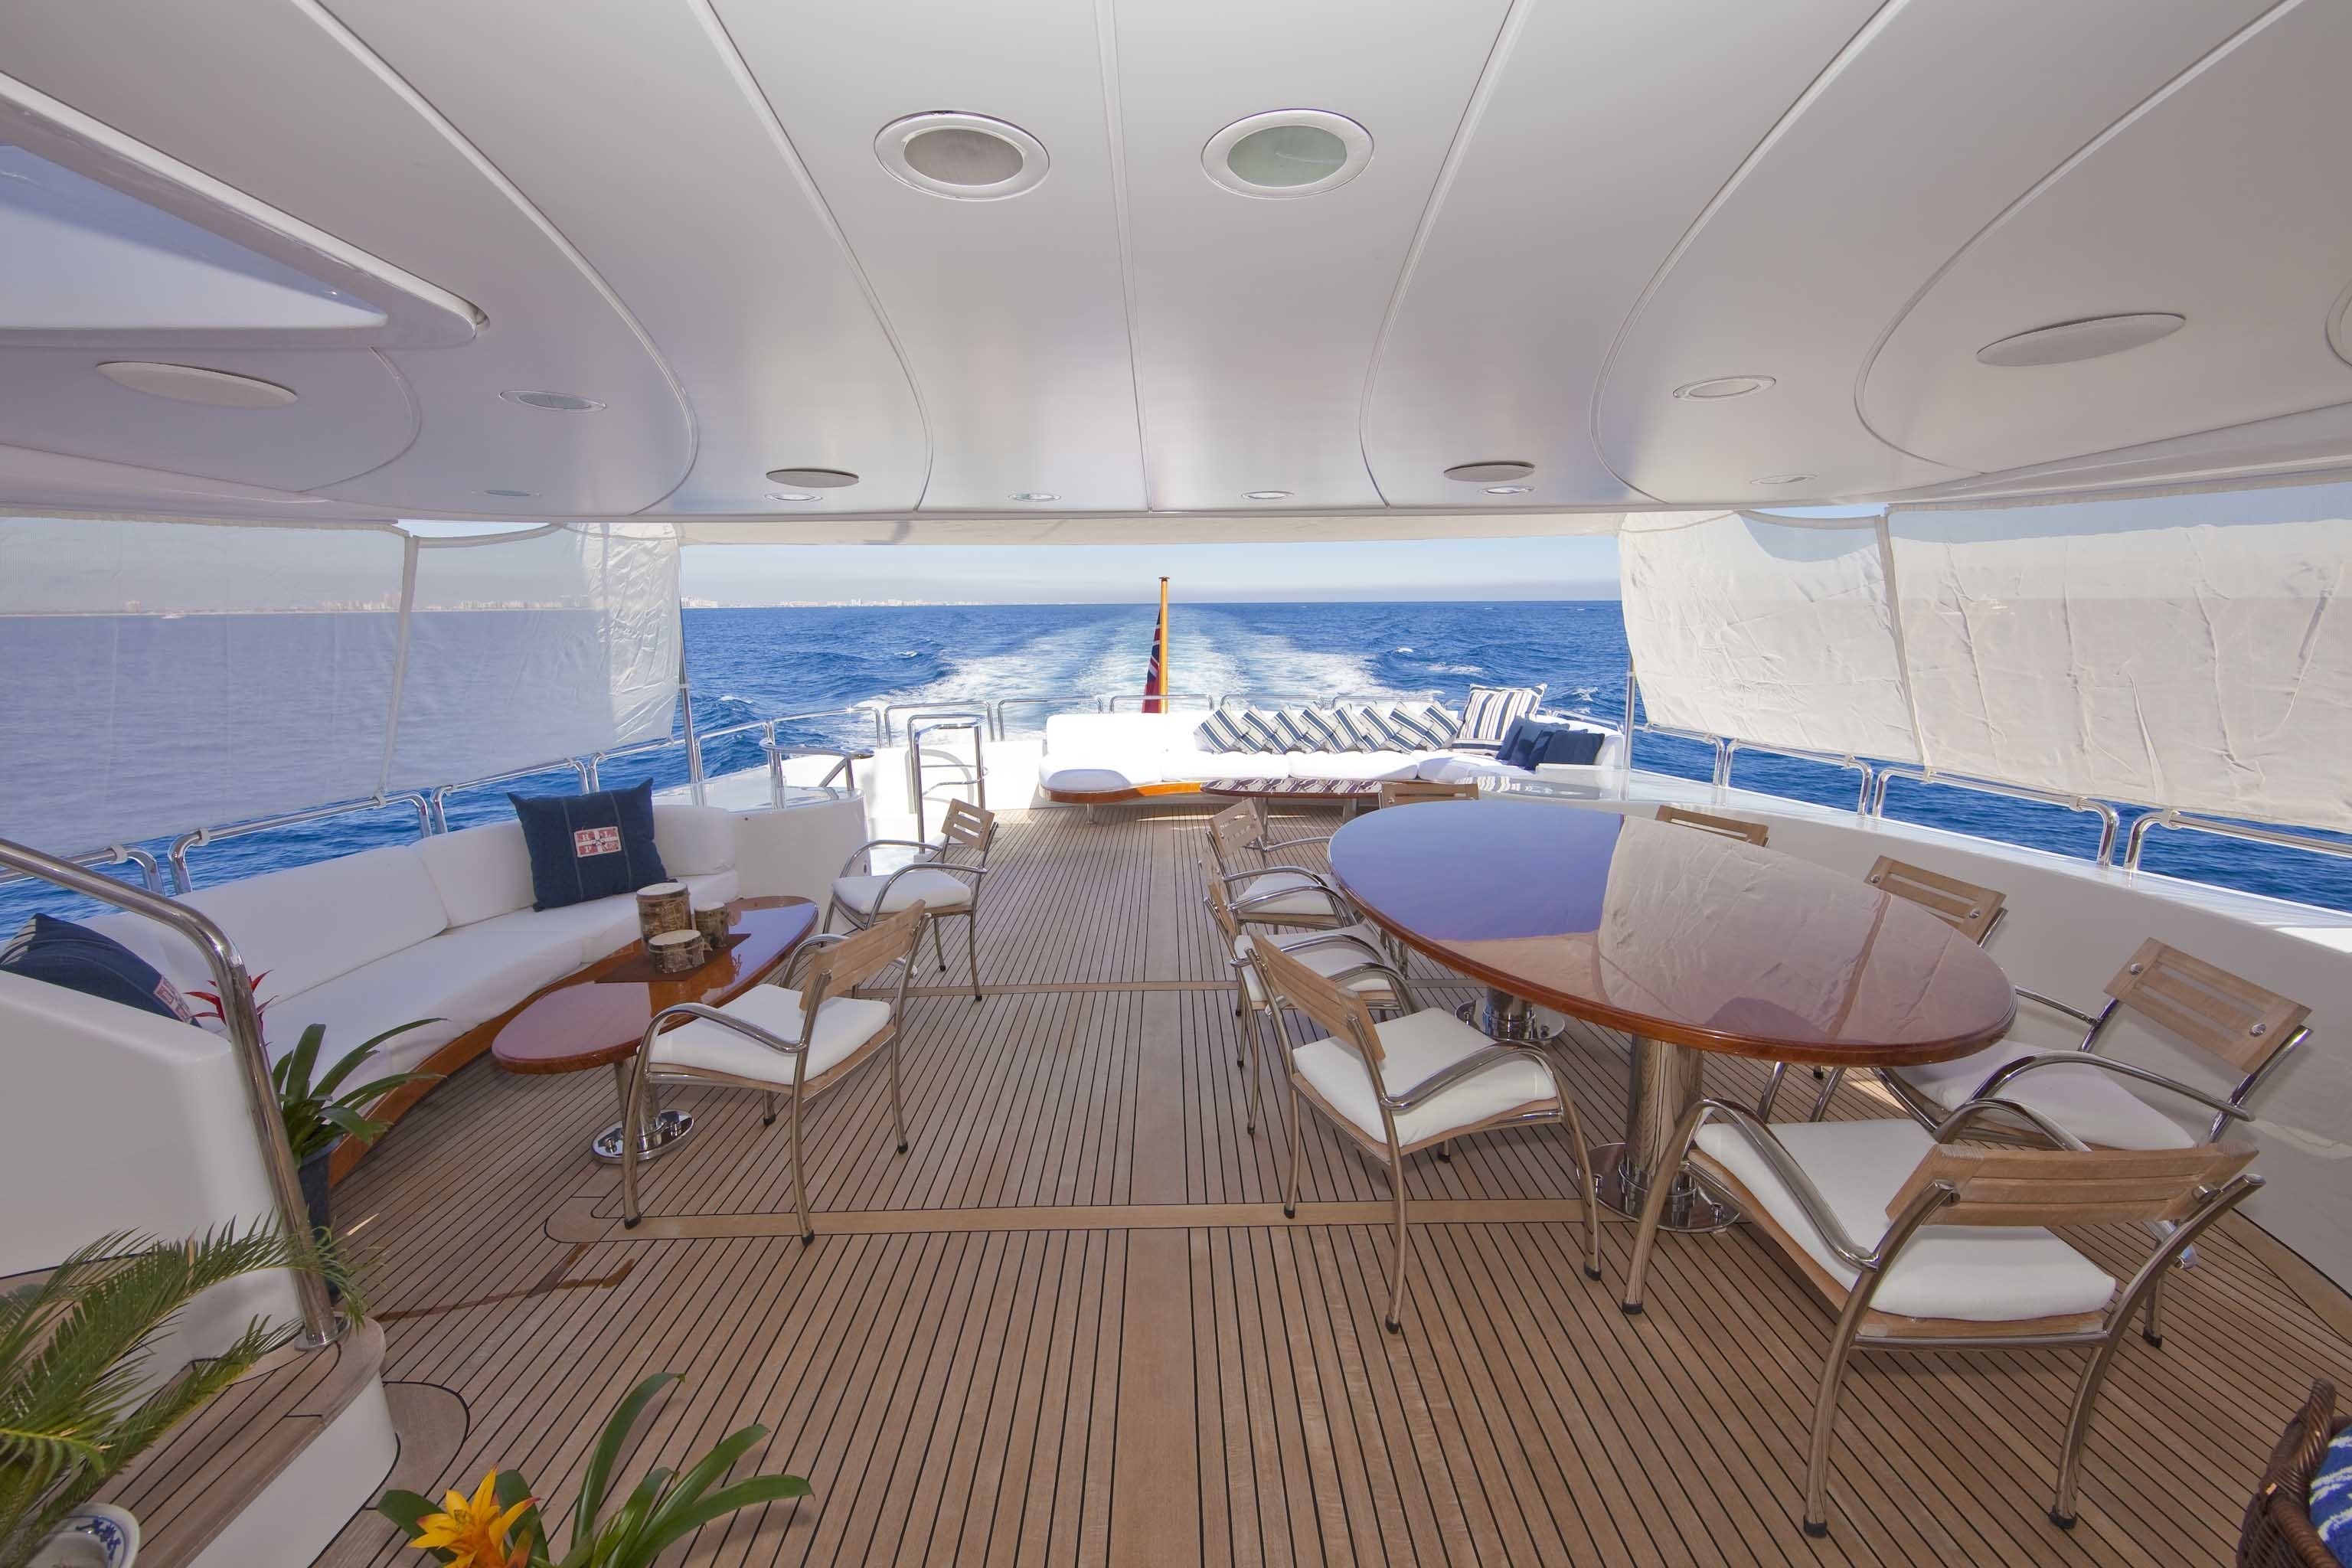 The 35m Yacht CAMARINA ROYALE